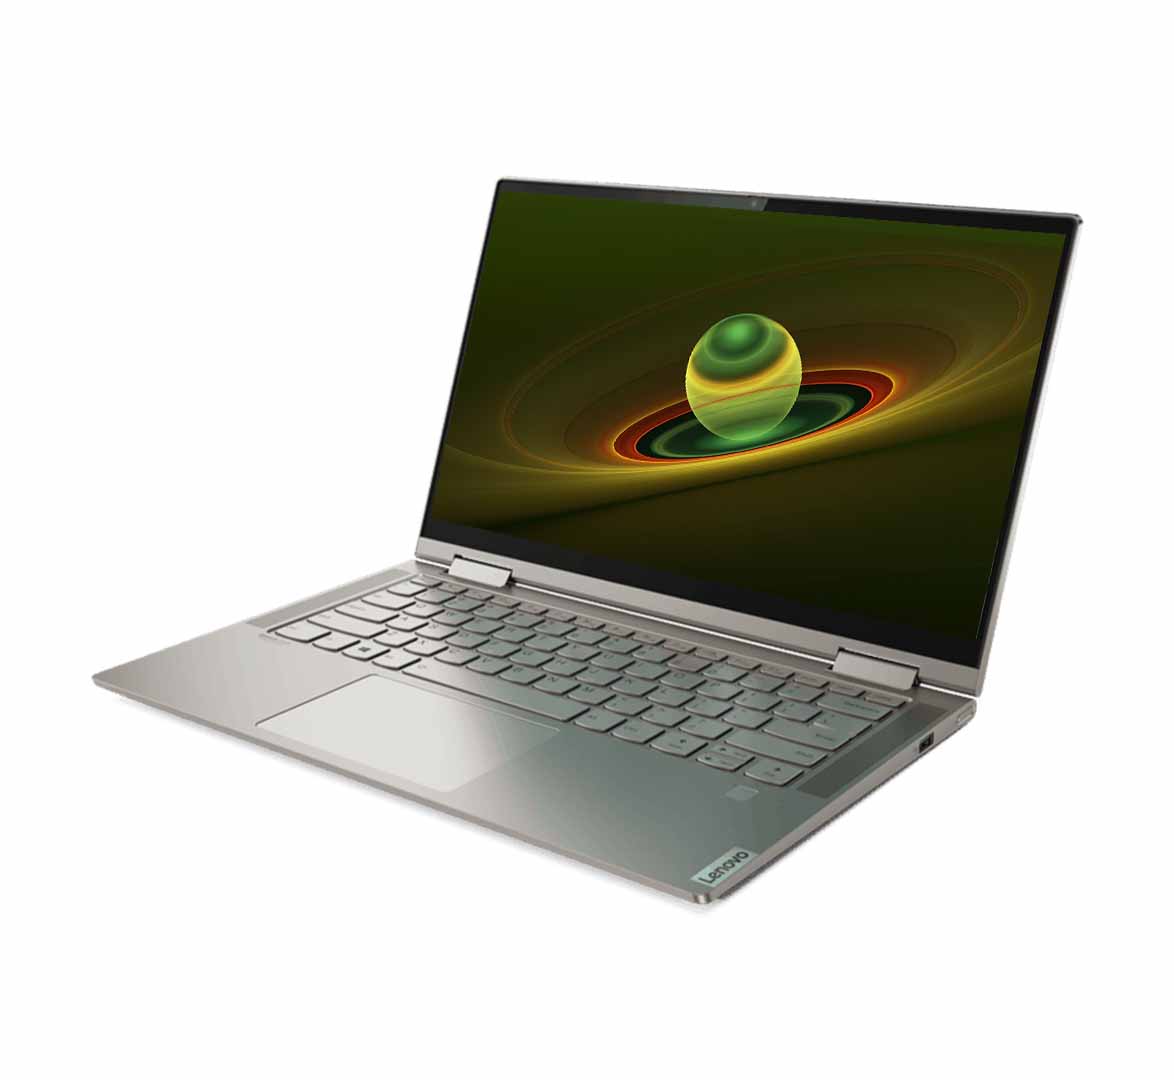 Lenovo ThinkPad YOGA C740 Business Laptop, Intel Core i5-10th Gen CPU, 12GB RAM, 256GB SSD, 15 inch Touchscreen, Windows 10, Refurbished Laptop